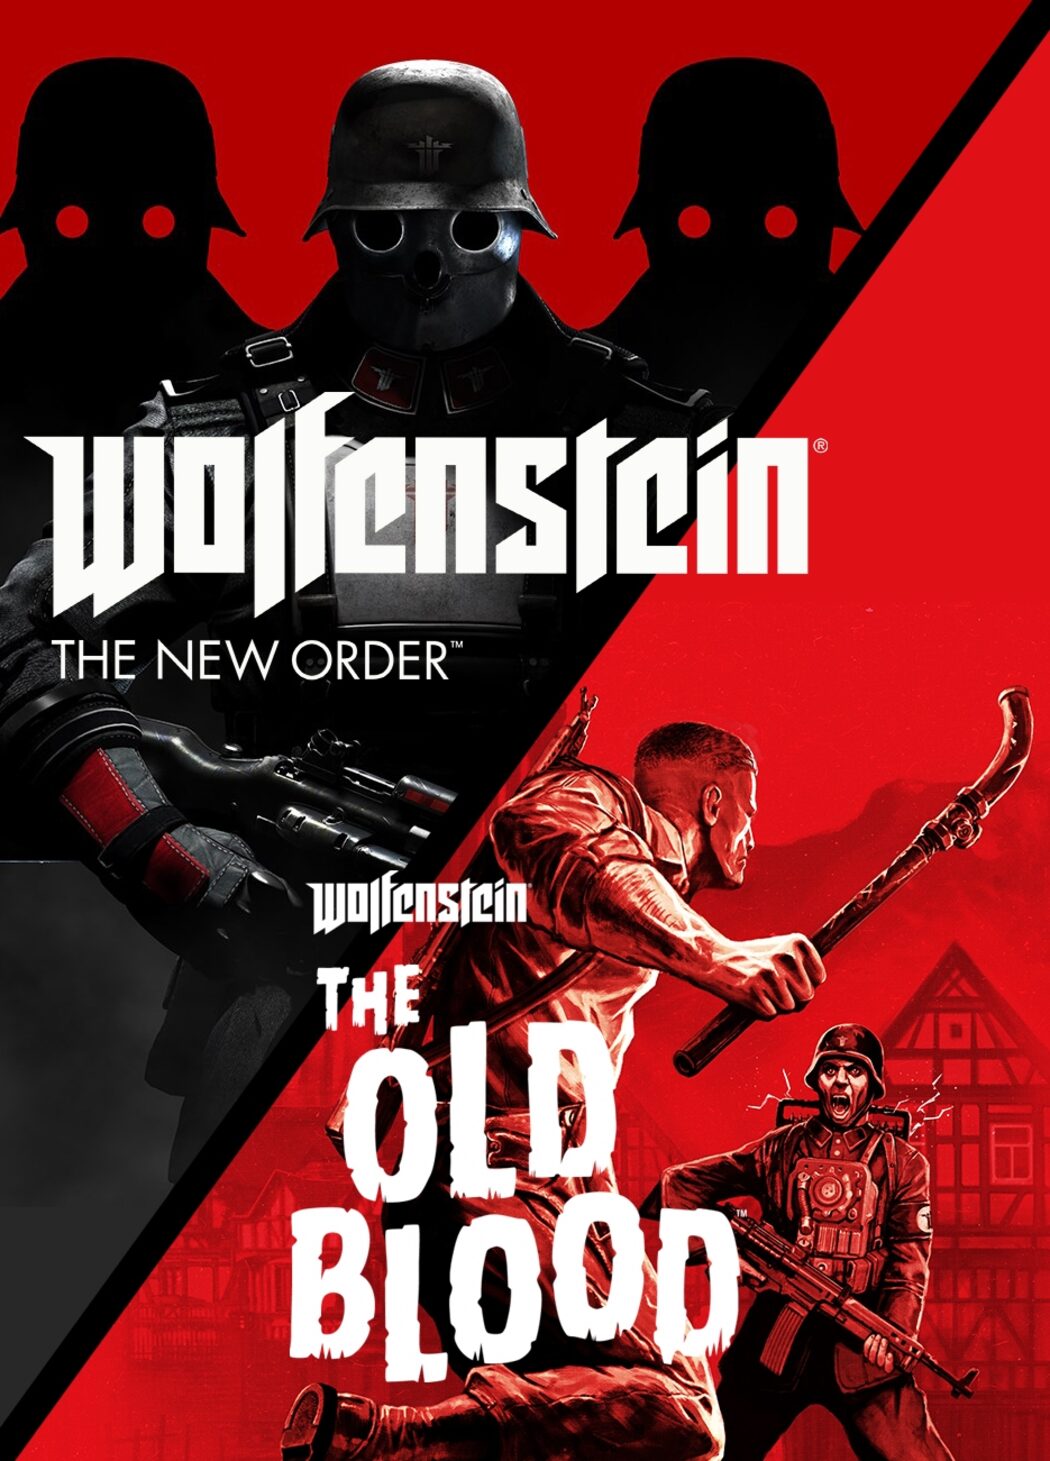 Wolfenstein: The Two-Pack